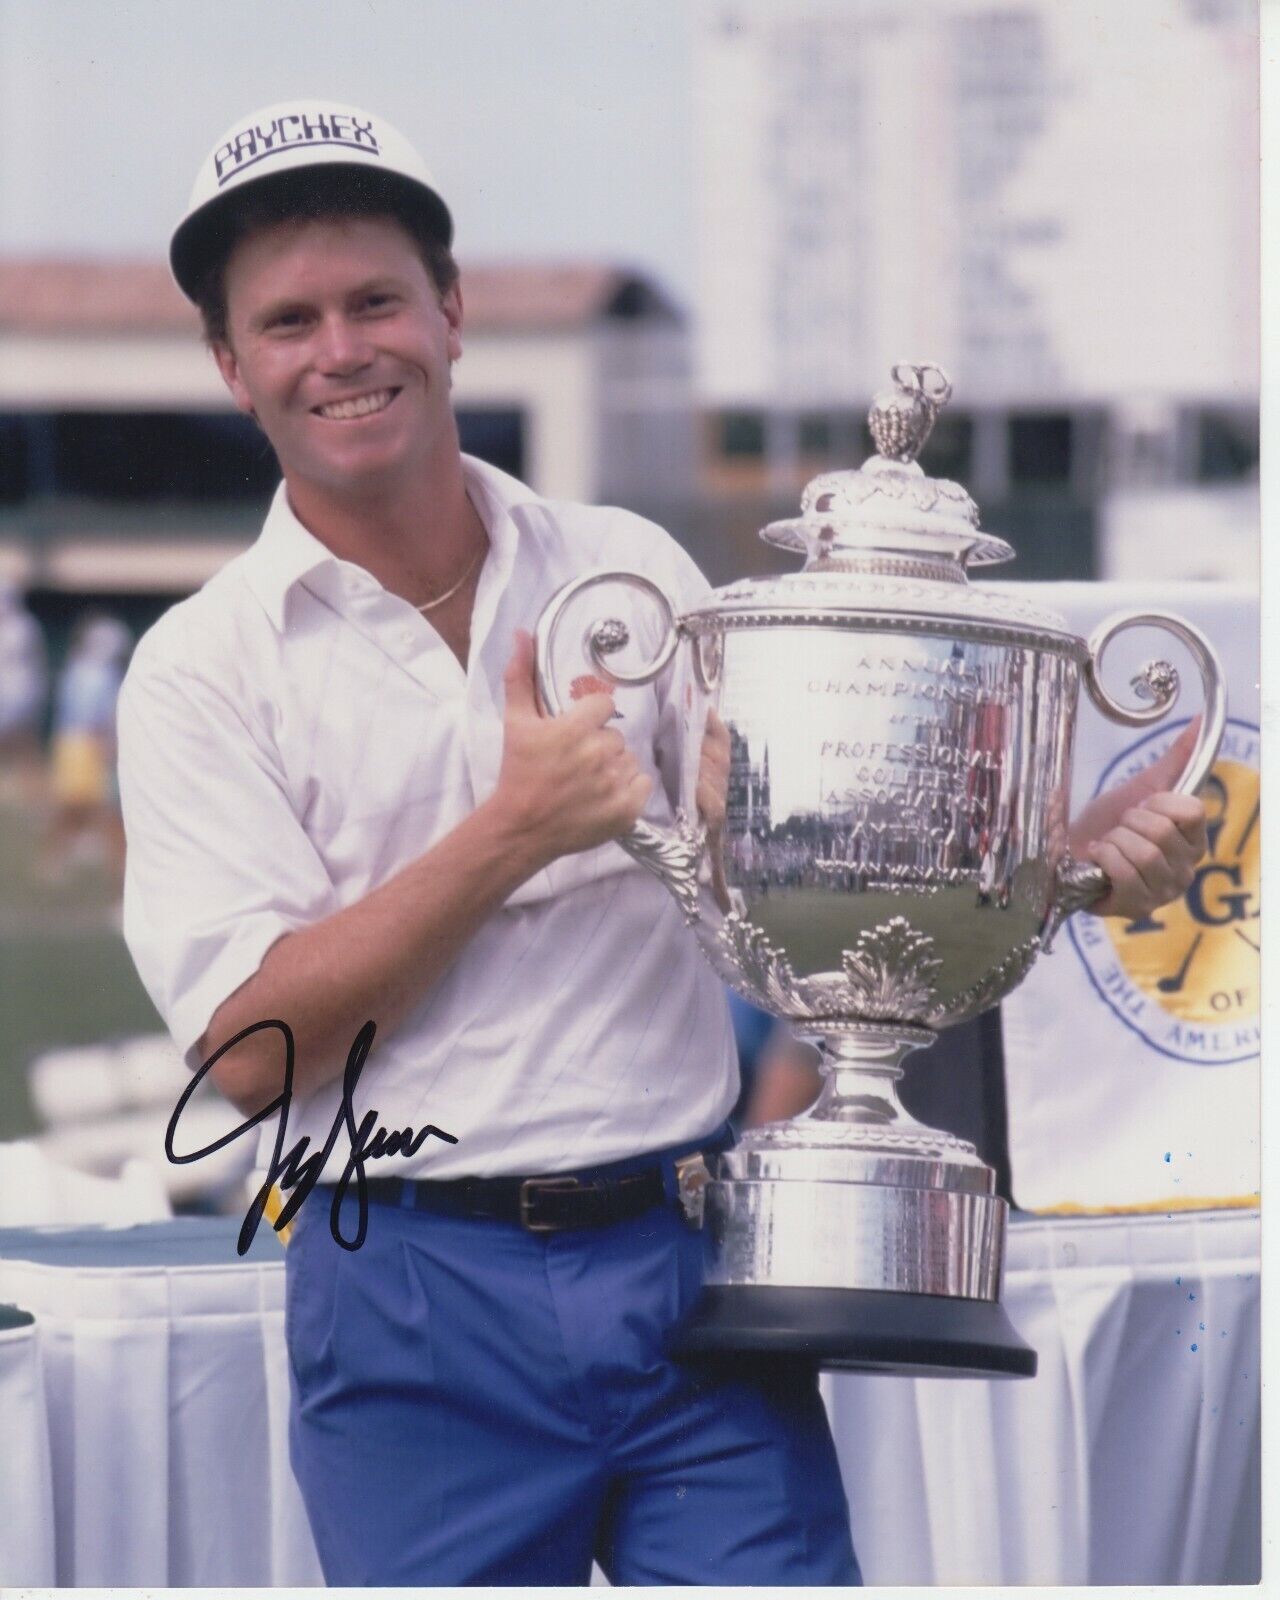 Jeff Sluman 1988 PGA Championship 8x10 Signed Photo Poster painting w/ COA #1